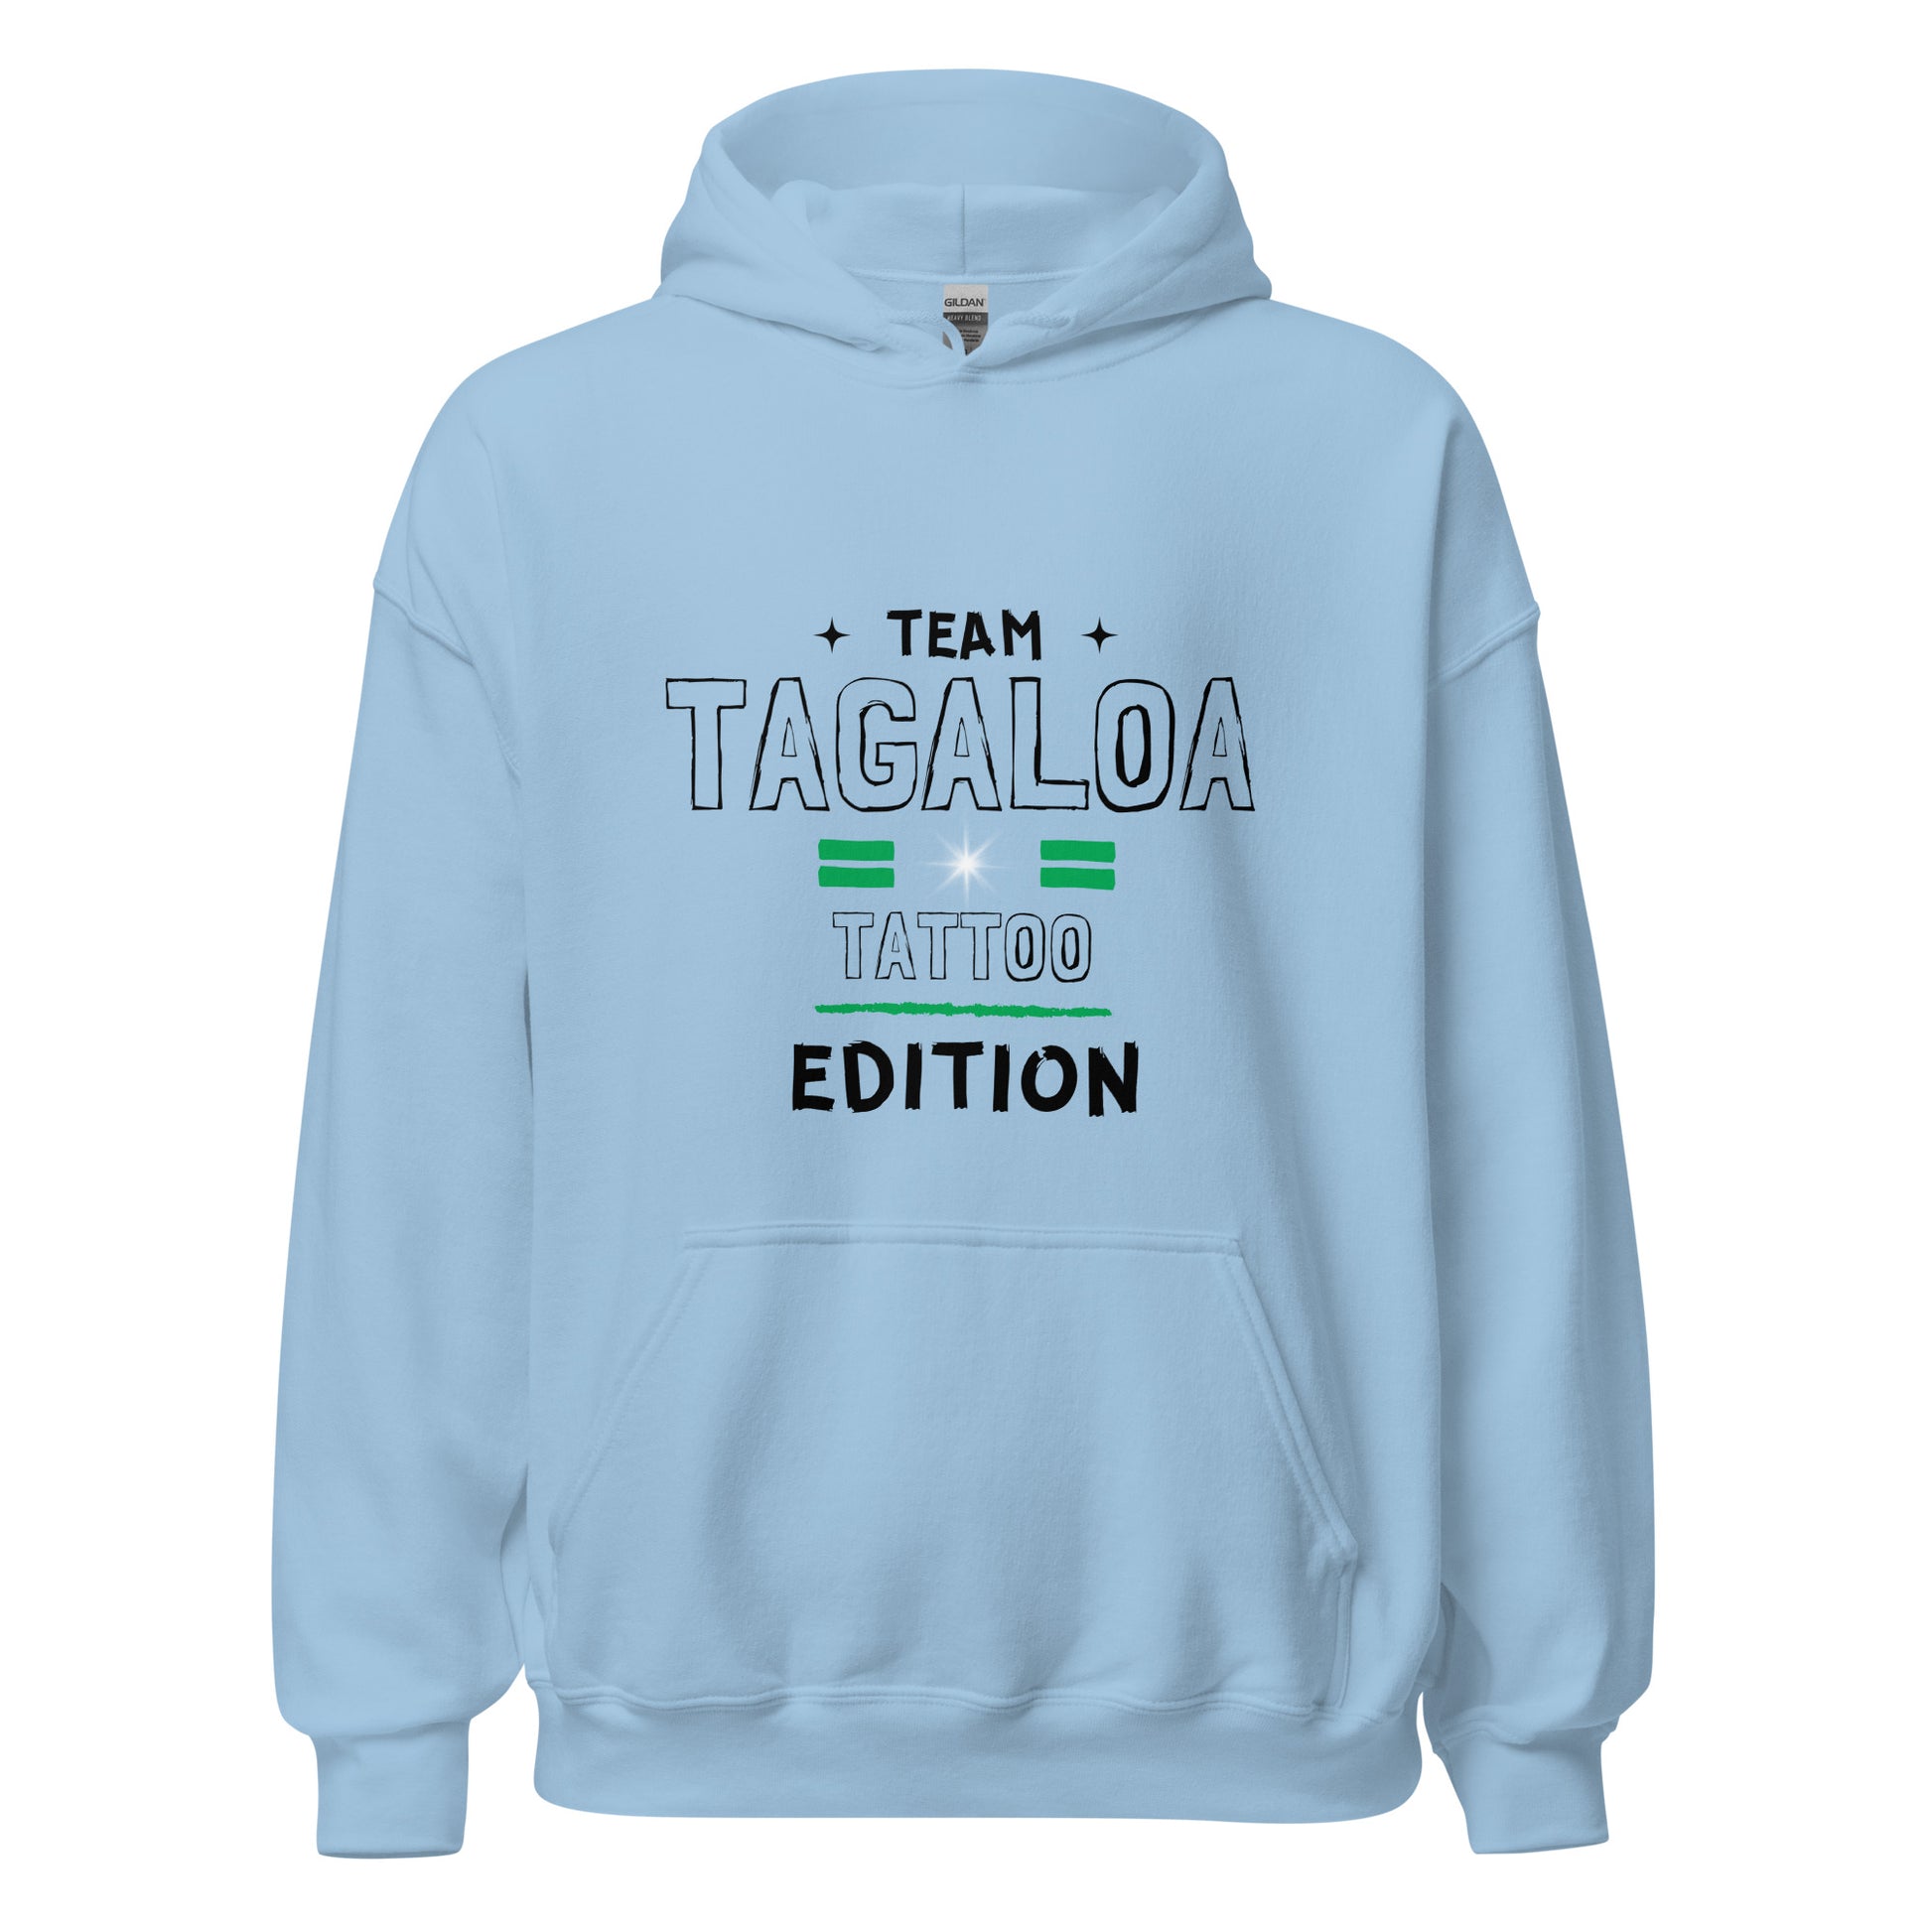 Team Tagaloa Tattoo Edition blue Hoodie